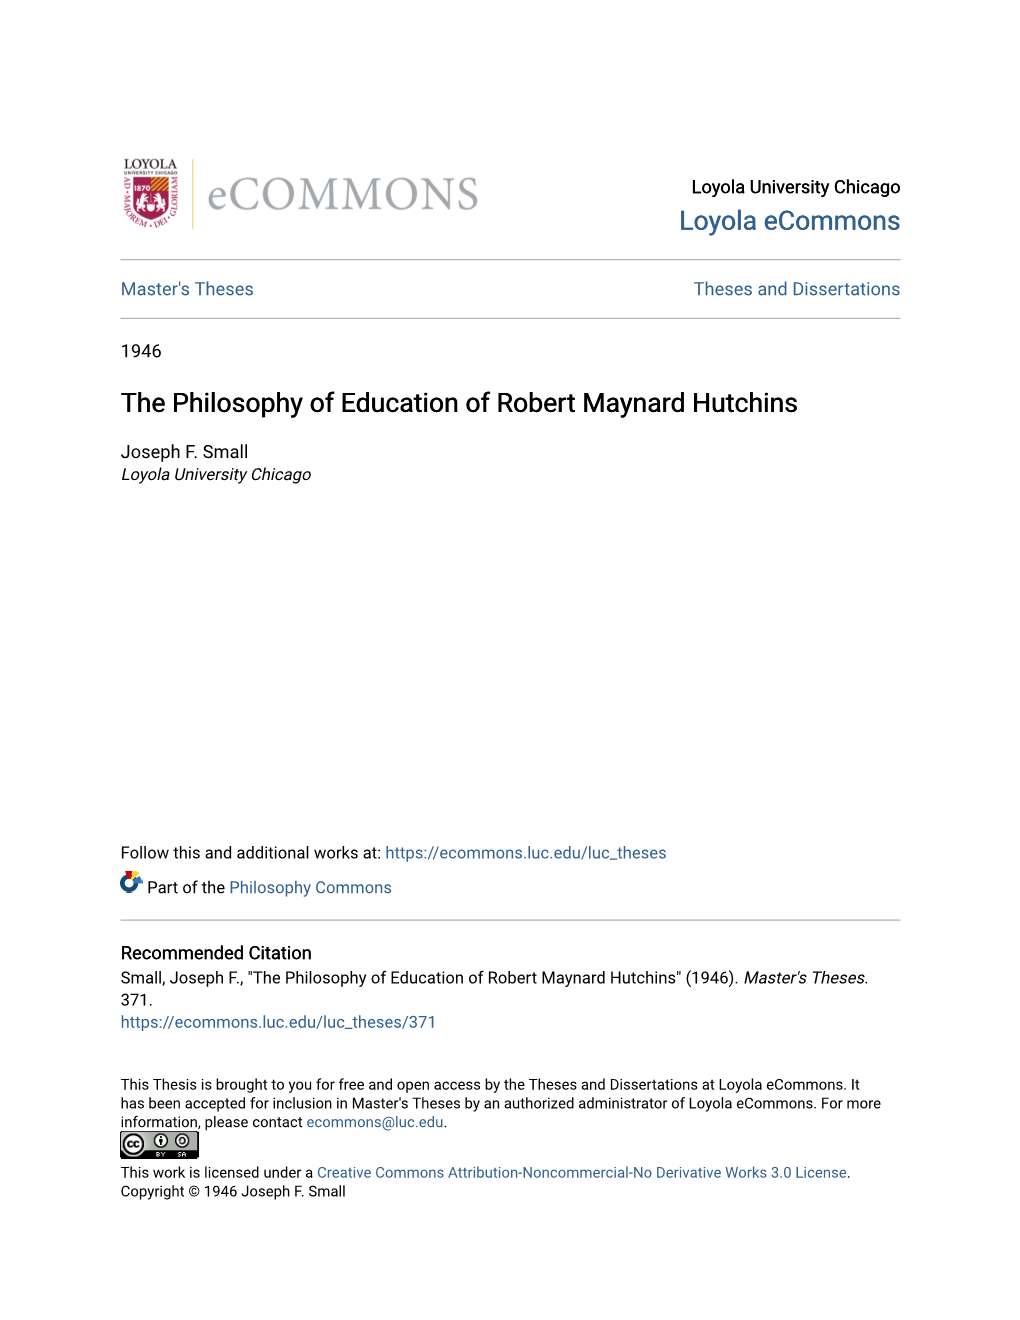 The Philosophy of Education of Robert Maynard Hutchins